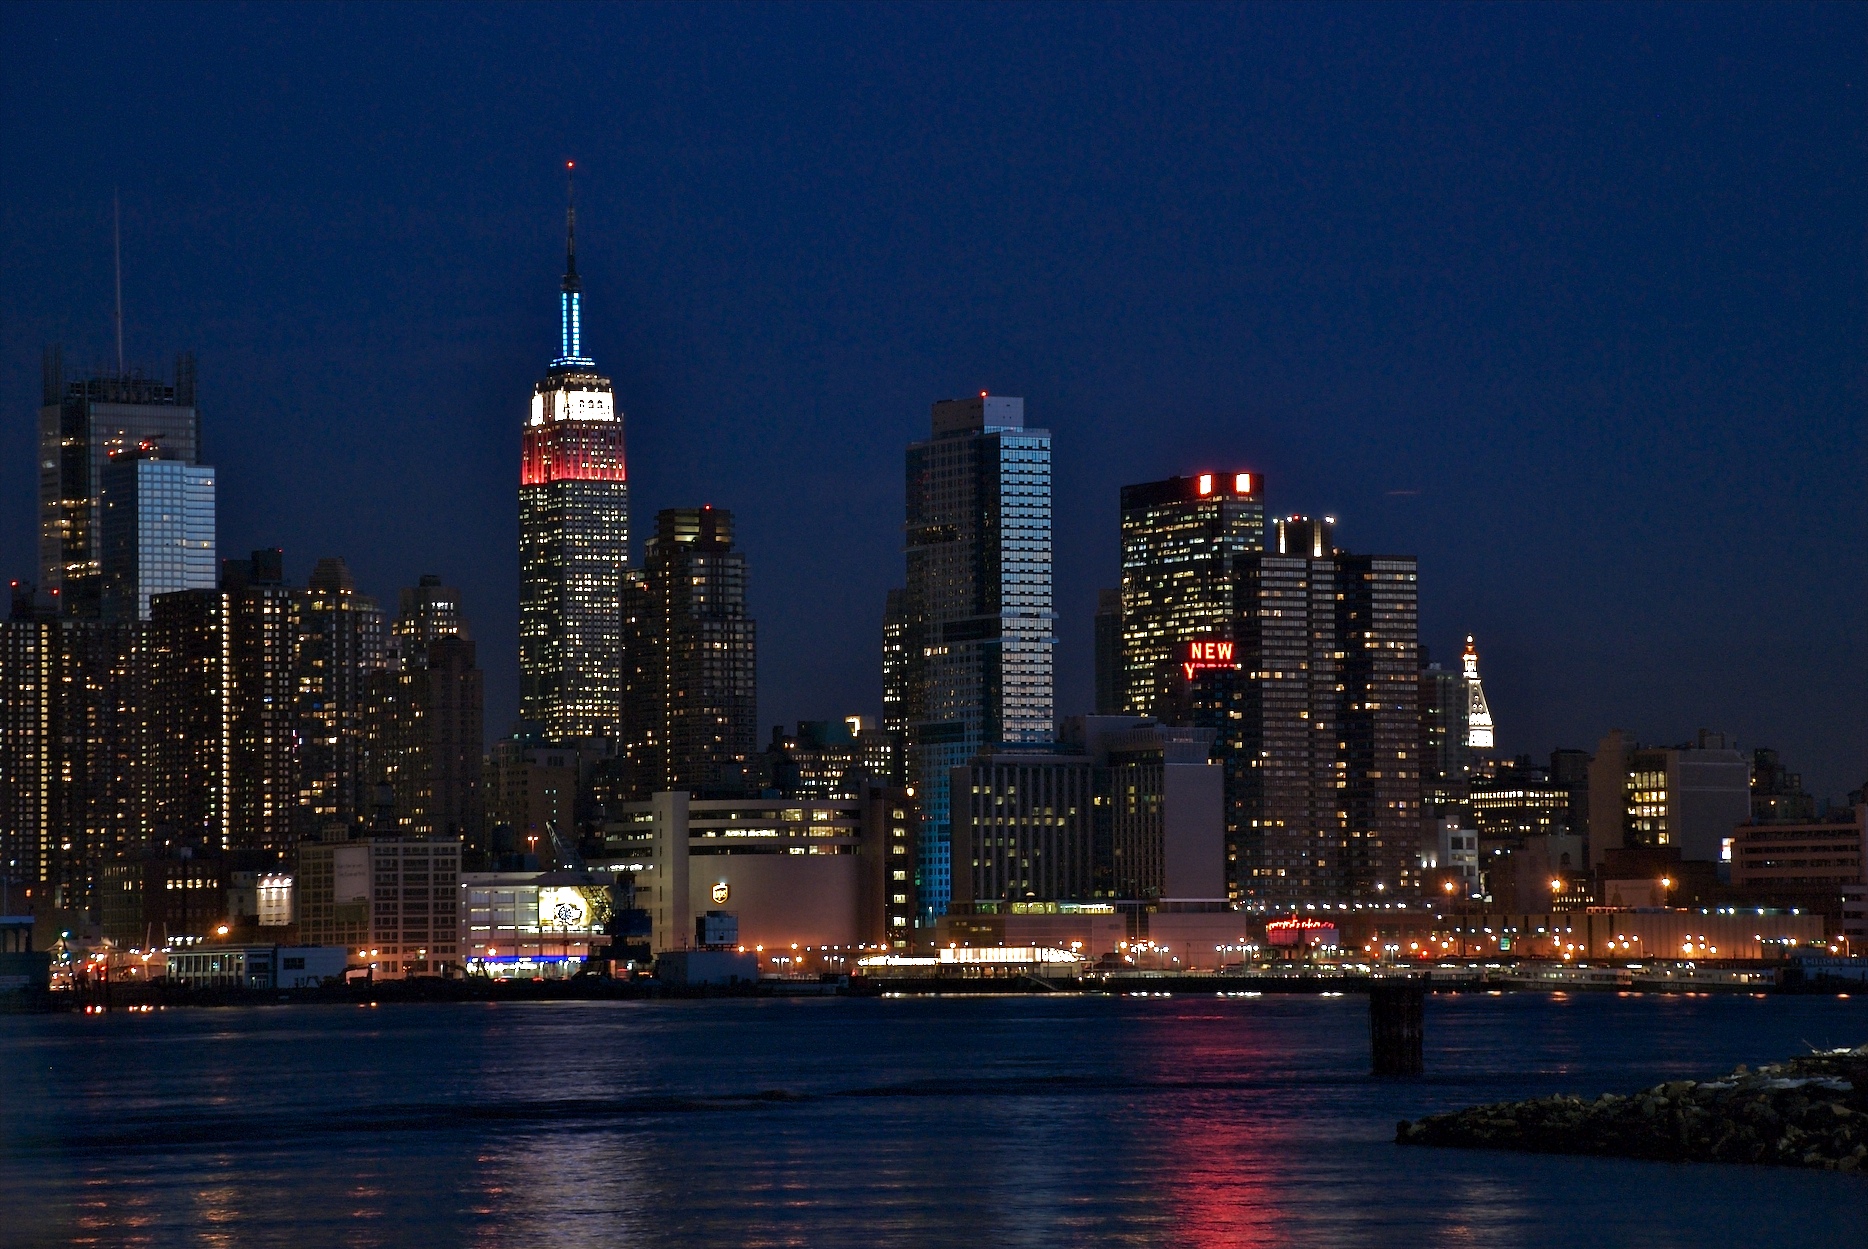 File:New York City at night-0.jpg - Wikimedia Commons